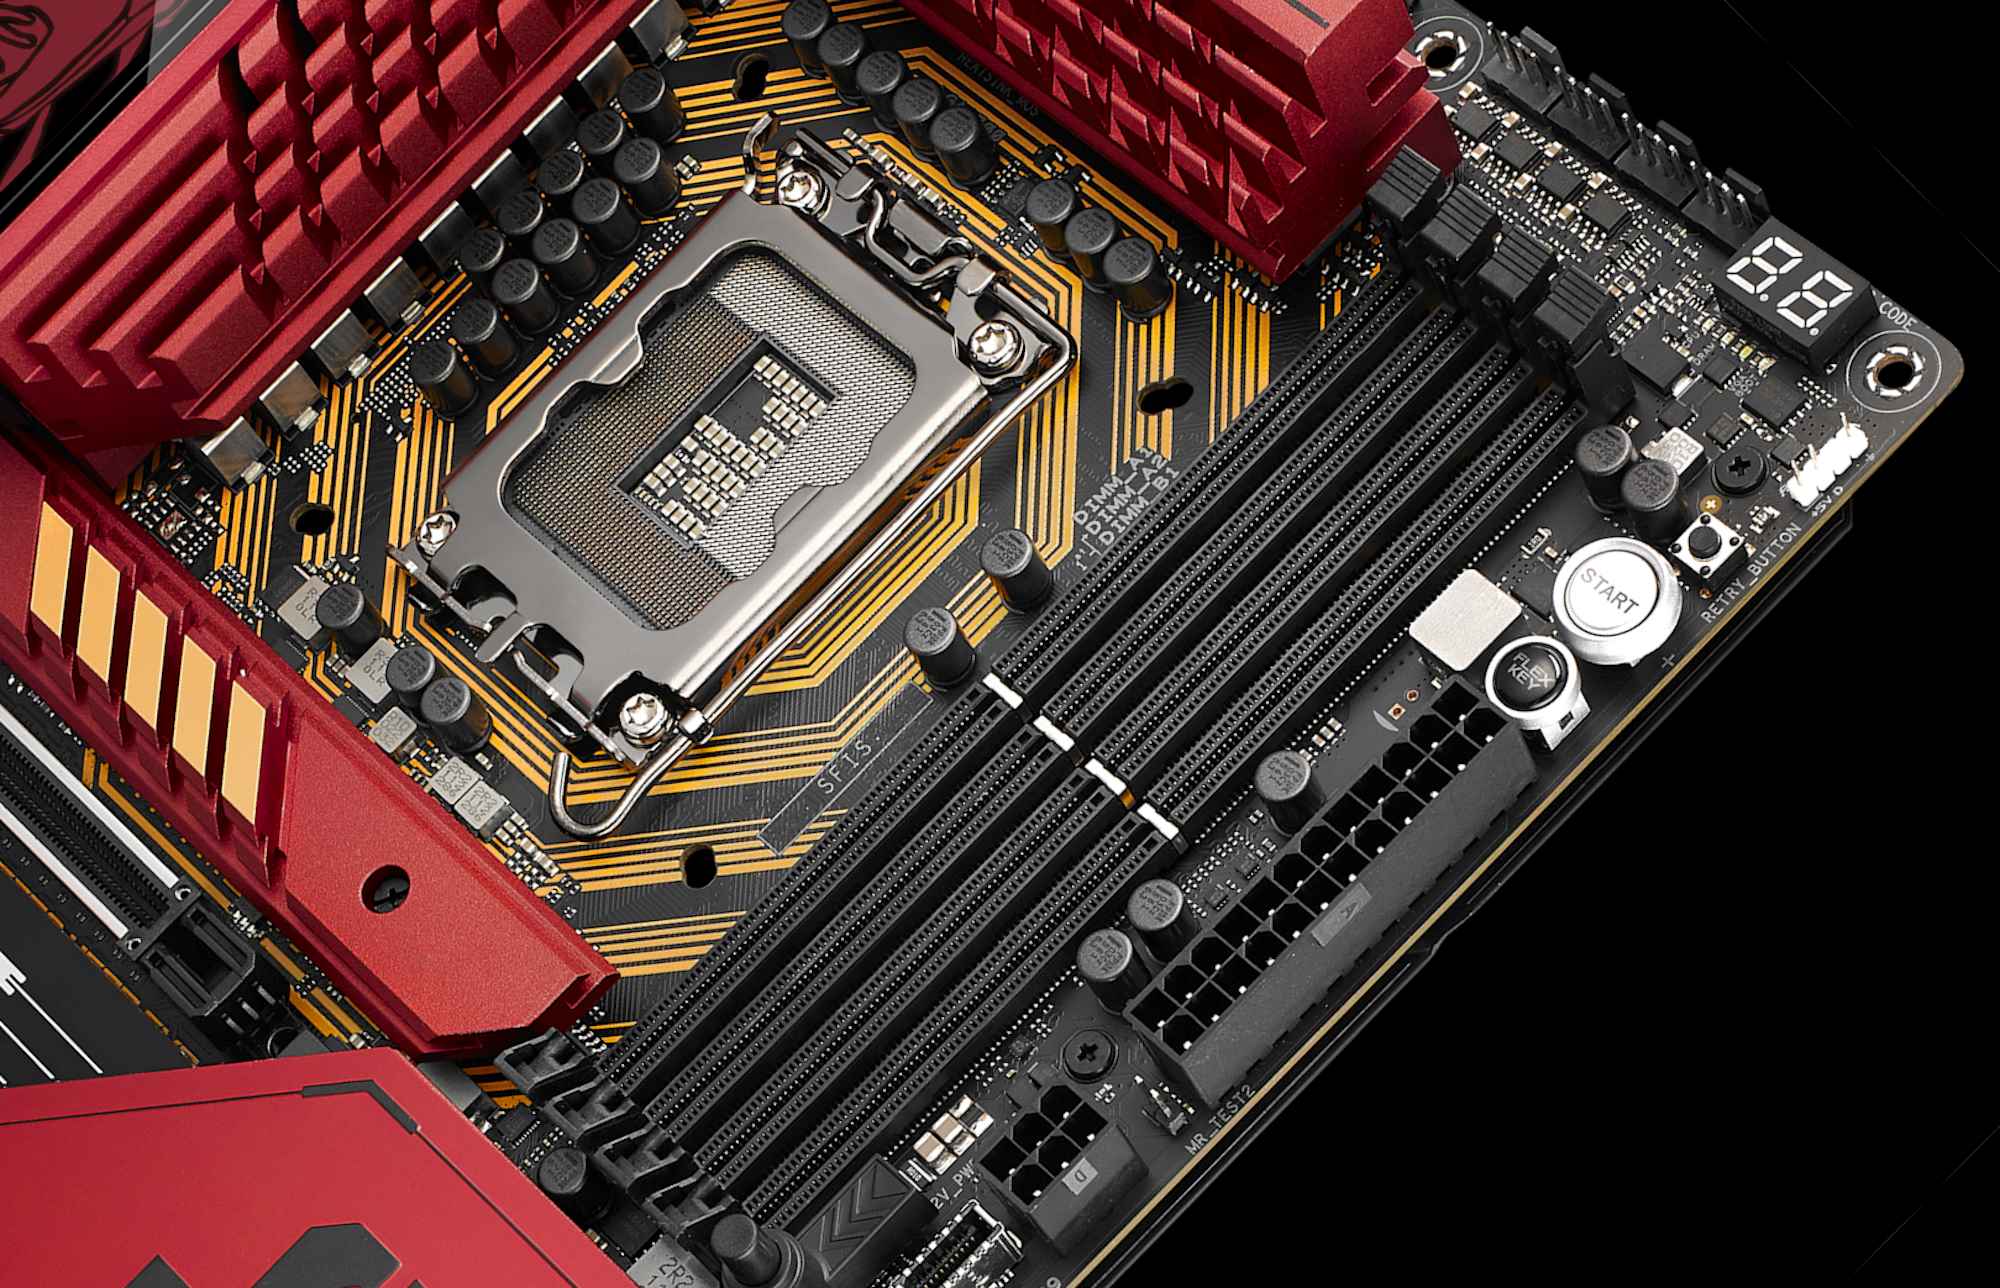 A closeup of the CPU socket and debugging indicators on a gaming motherboard